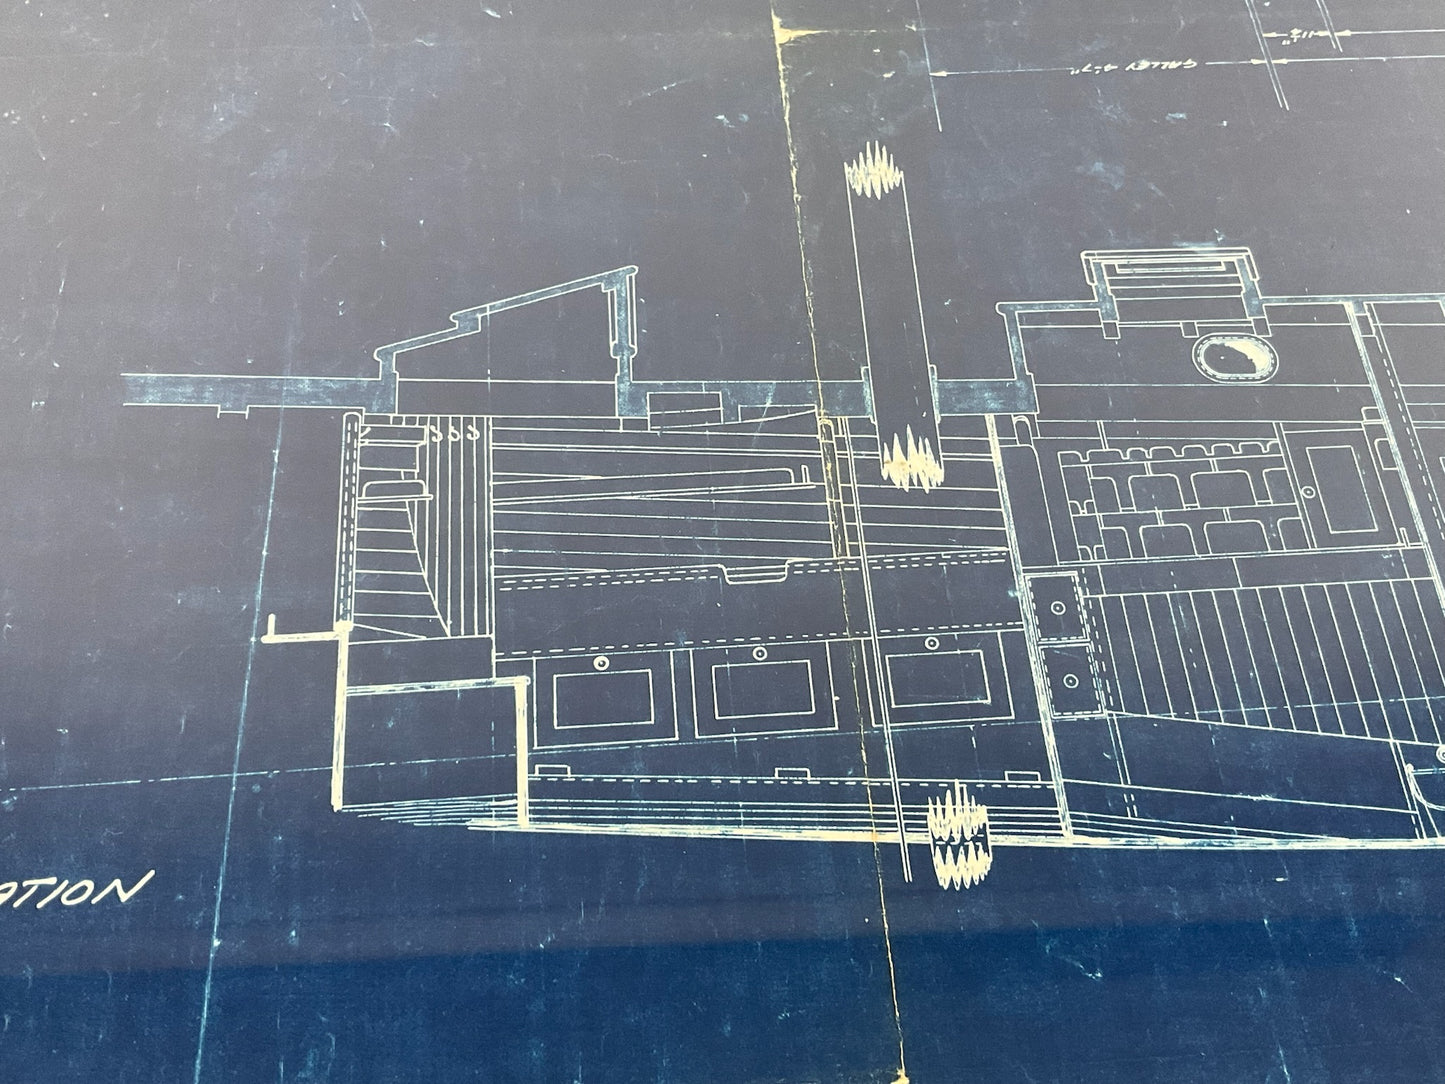 John Alden Yacht Blueprint